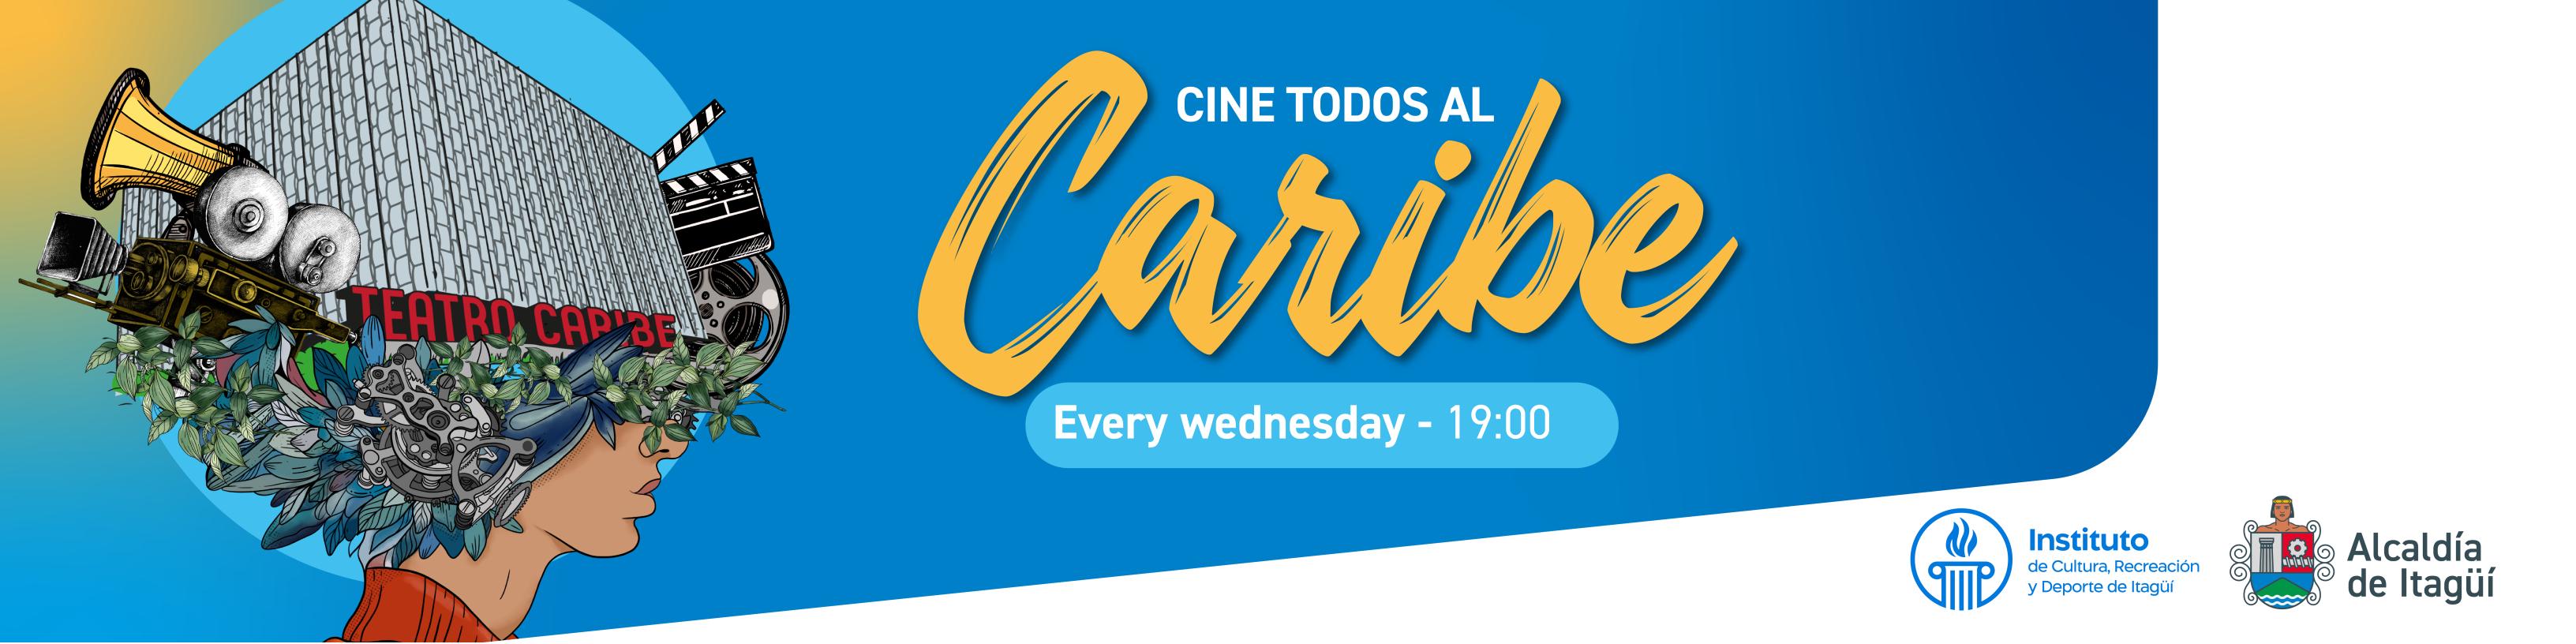 Cine Todos al Caribe, every wednesday at 19:00